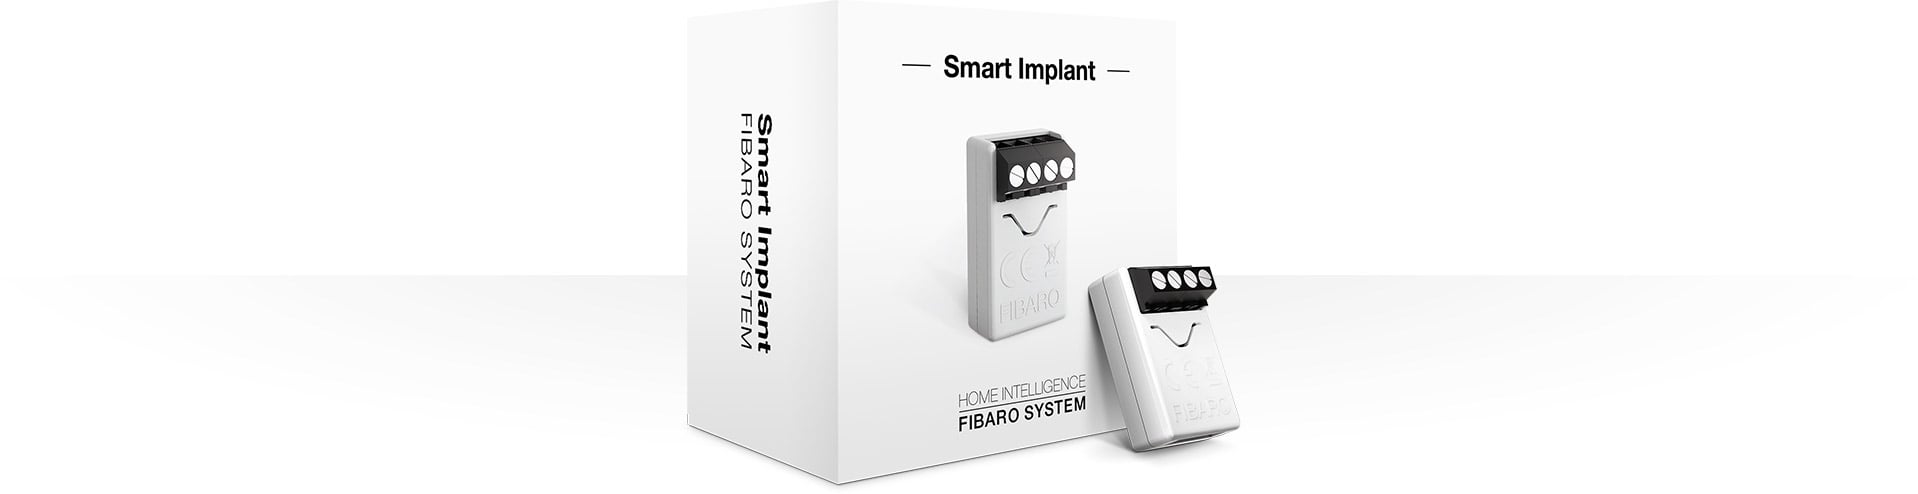 smart-implant-packshot